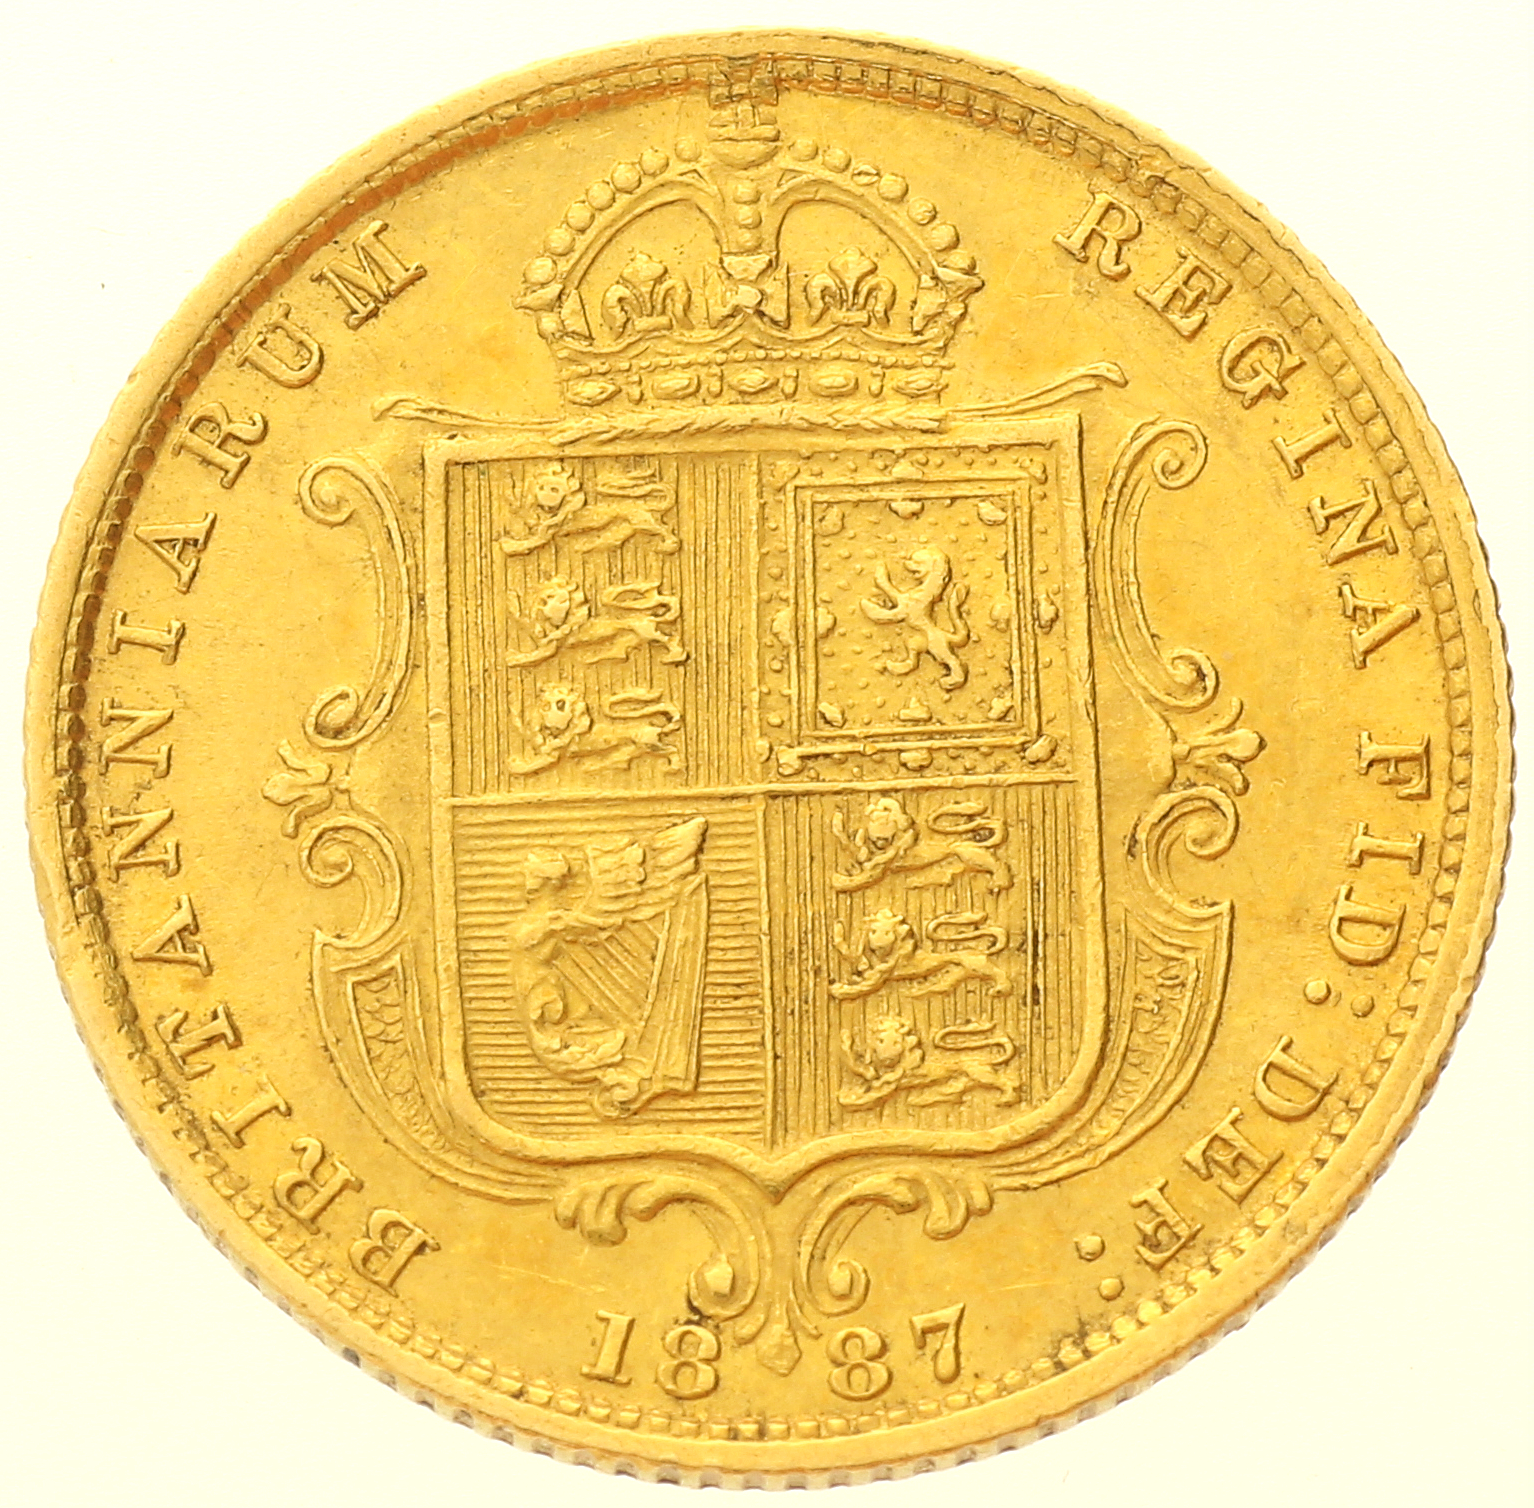 Great Britain - 1/2 Sovereign - 1887 - Victoria